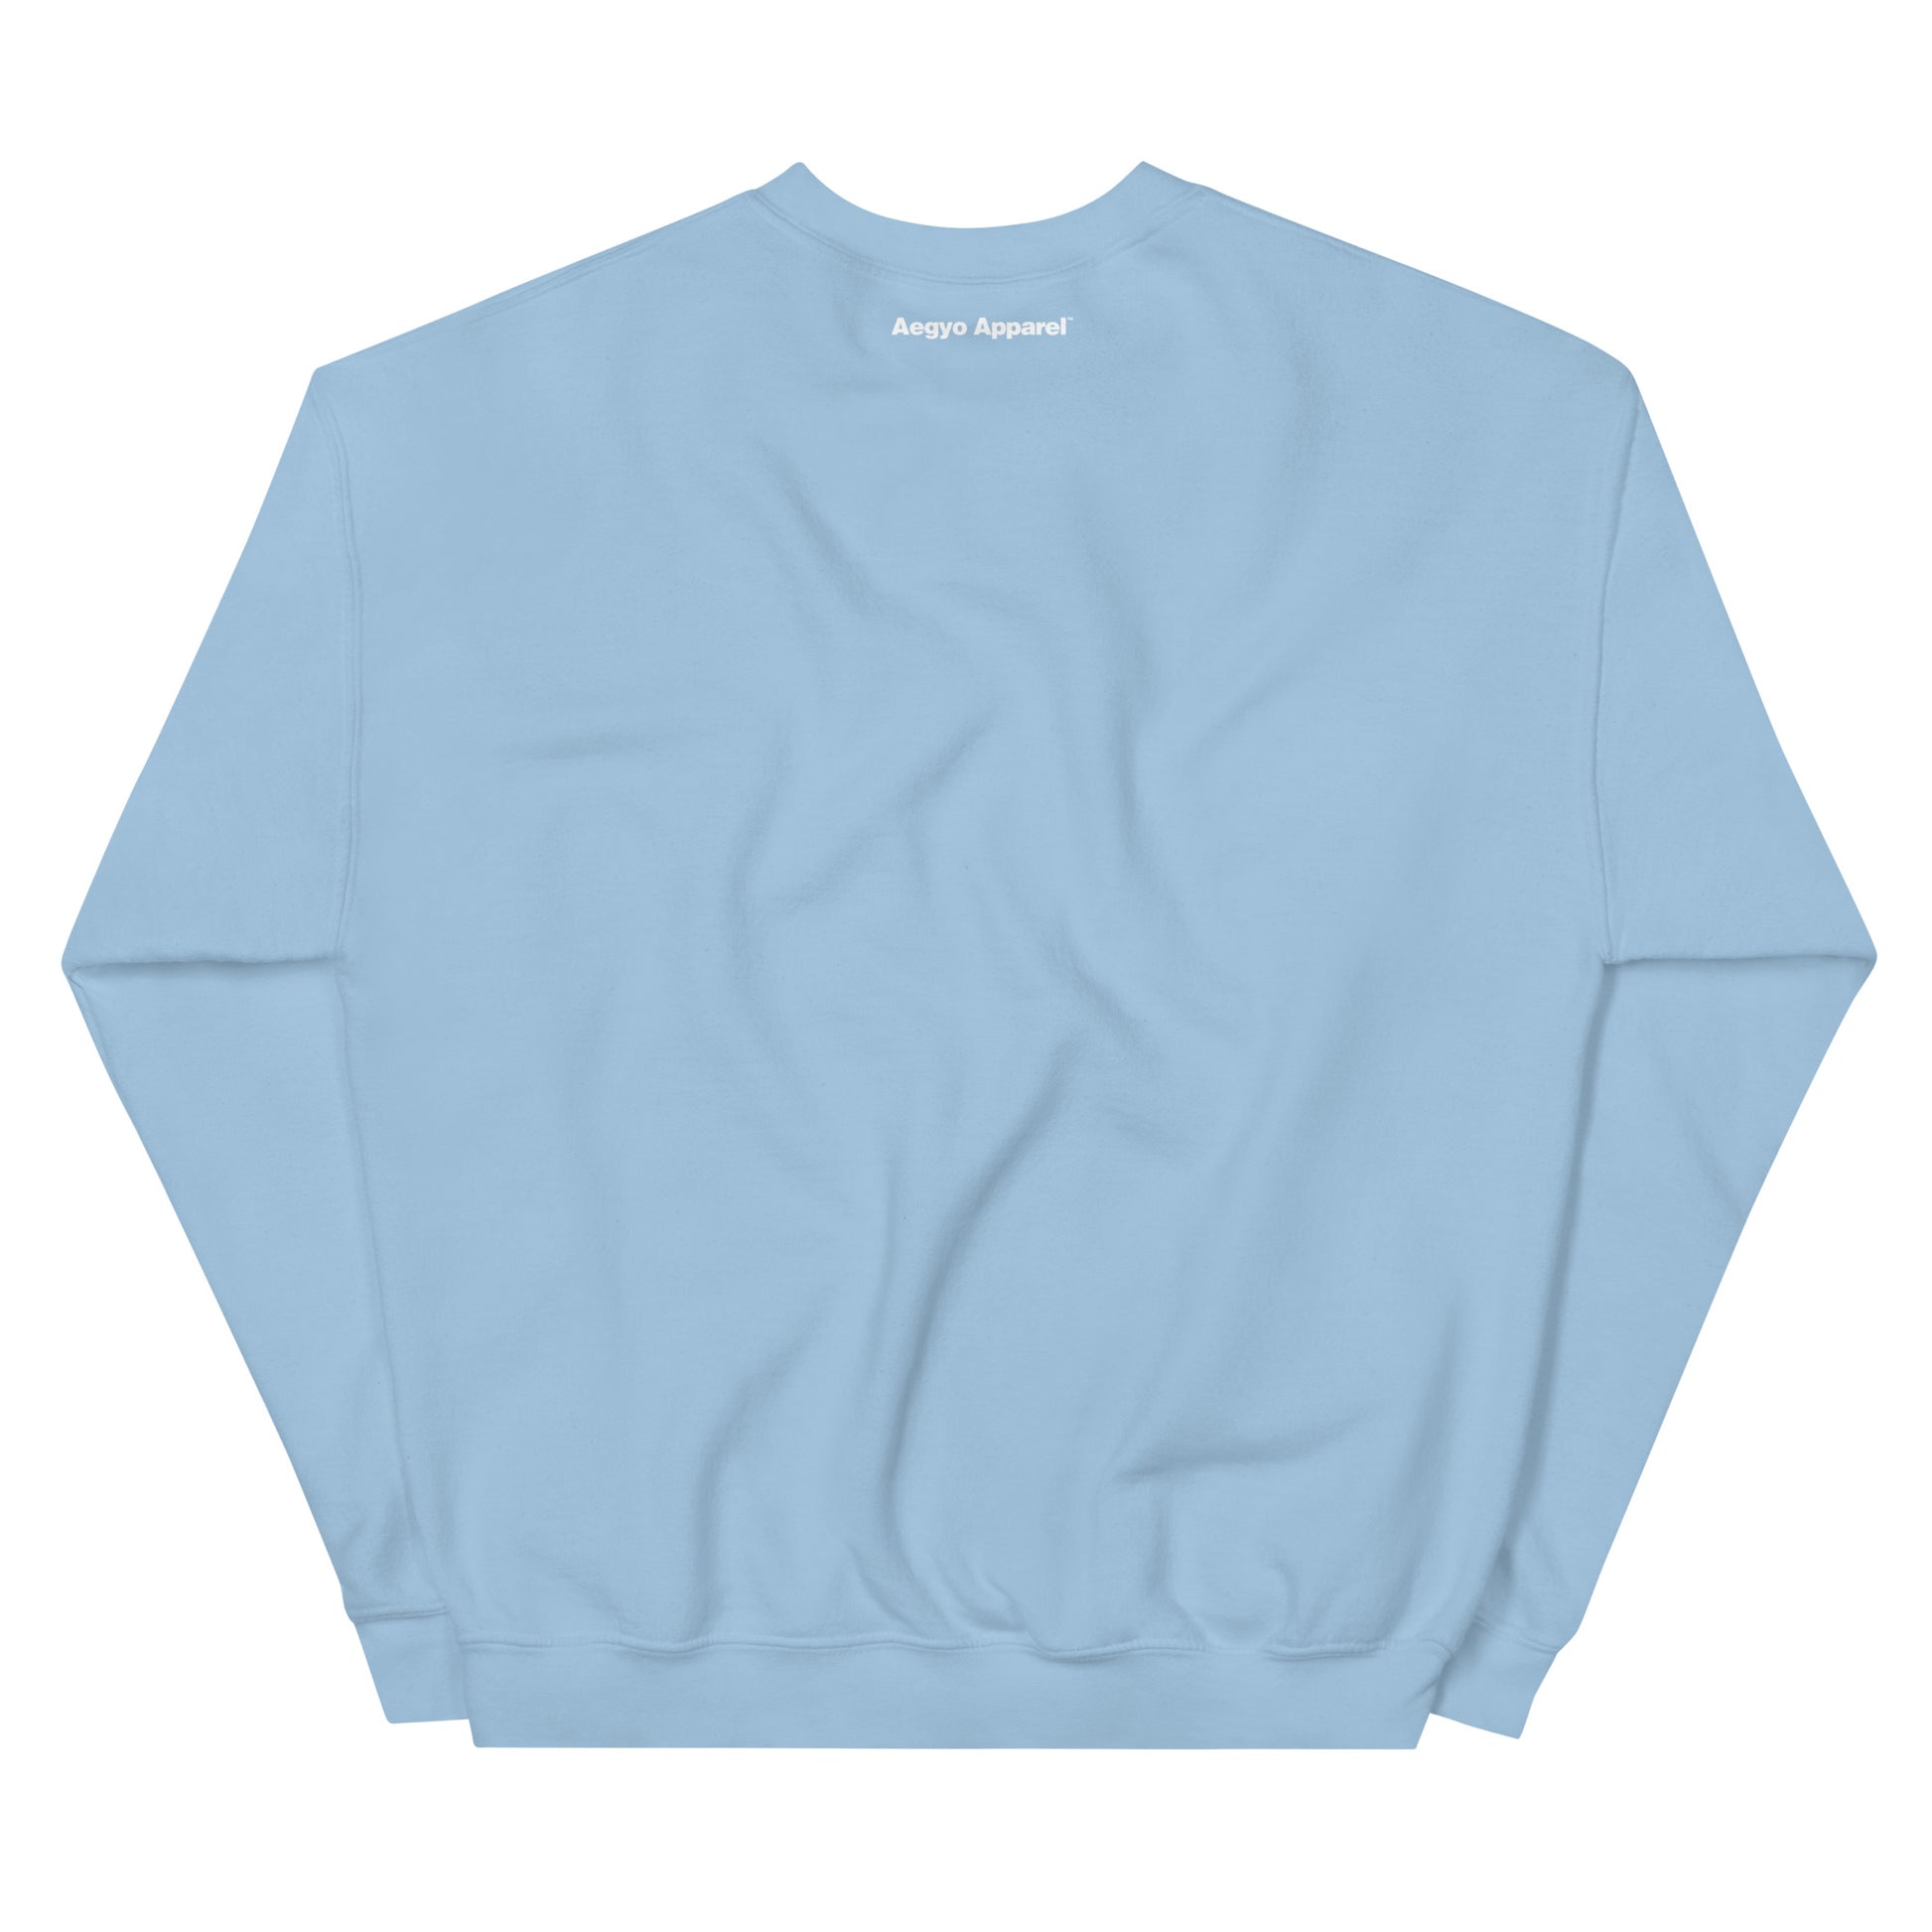 newjeans inspired sweatshirt new jeans tourist sweatshirt kpop merch sweater touristcore aegyo apparel